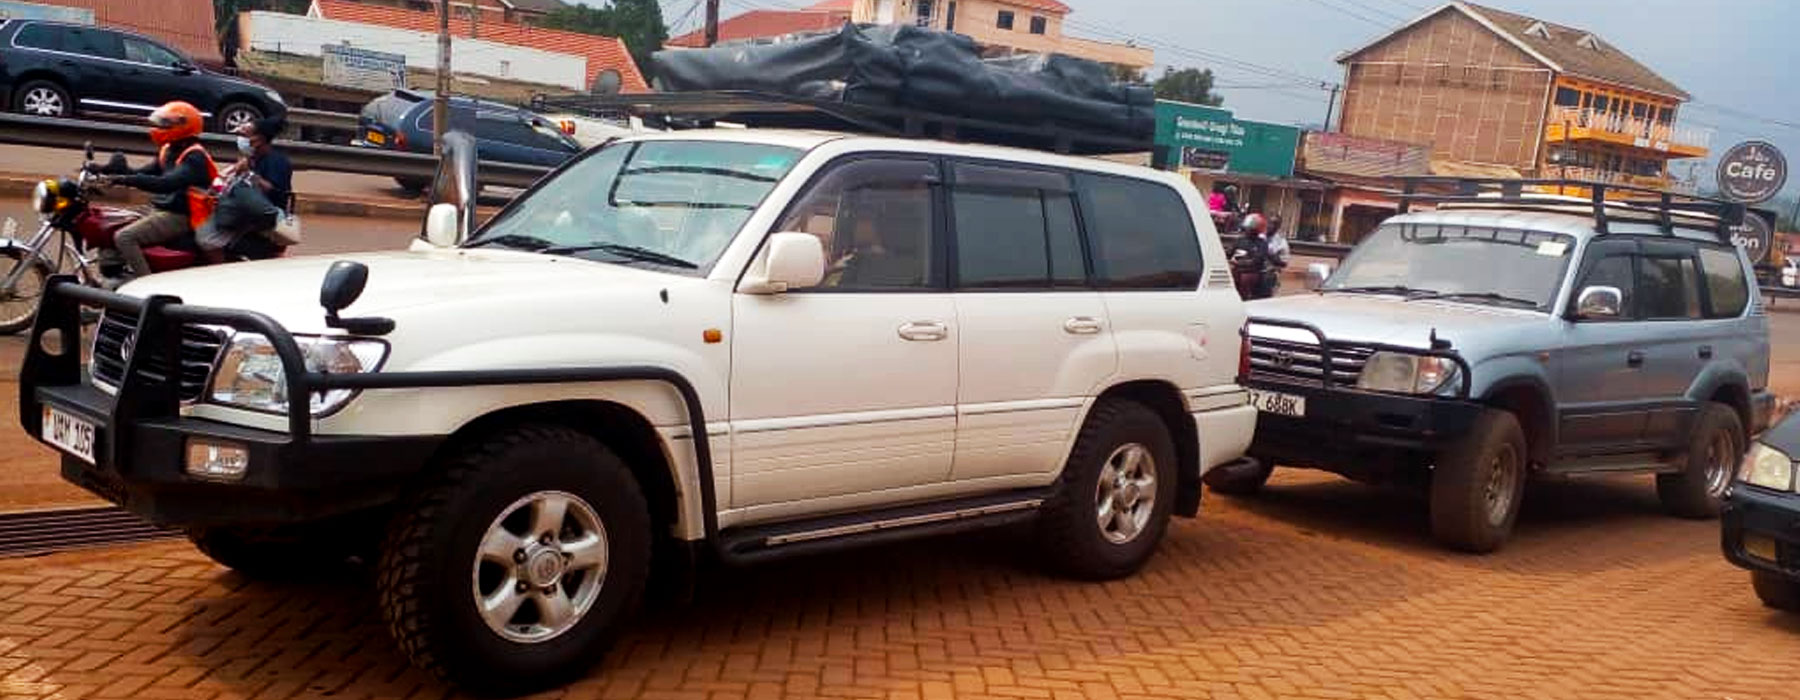 4x4-car-rentals-by-cheap-uganda-self-drive